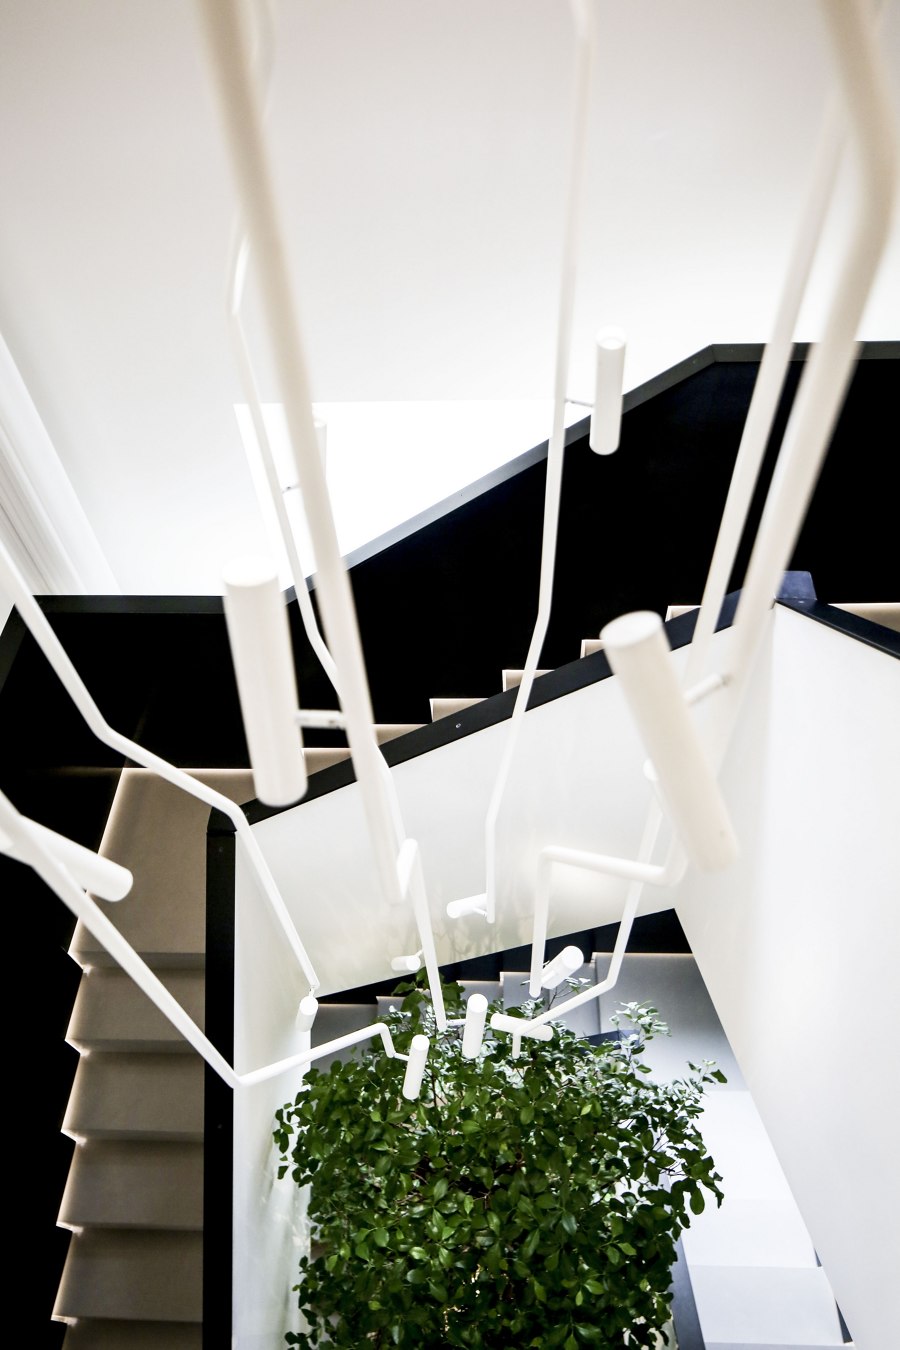 Bramante House by LAI STUDIO, Maurizio Lai | Living space